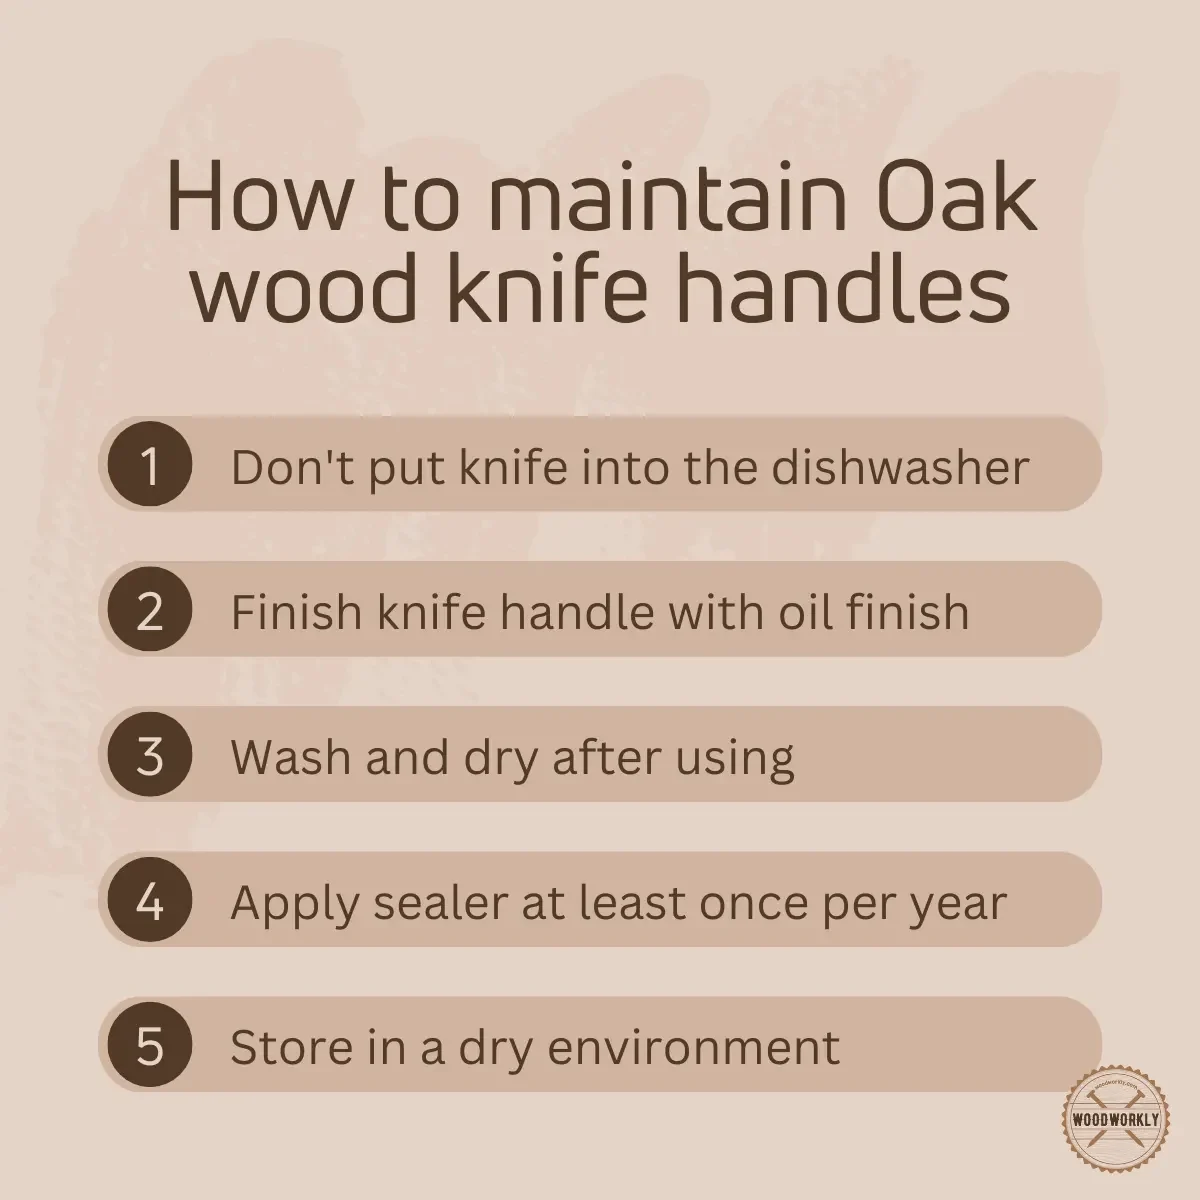 How to maintain Oak wood knife handles